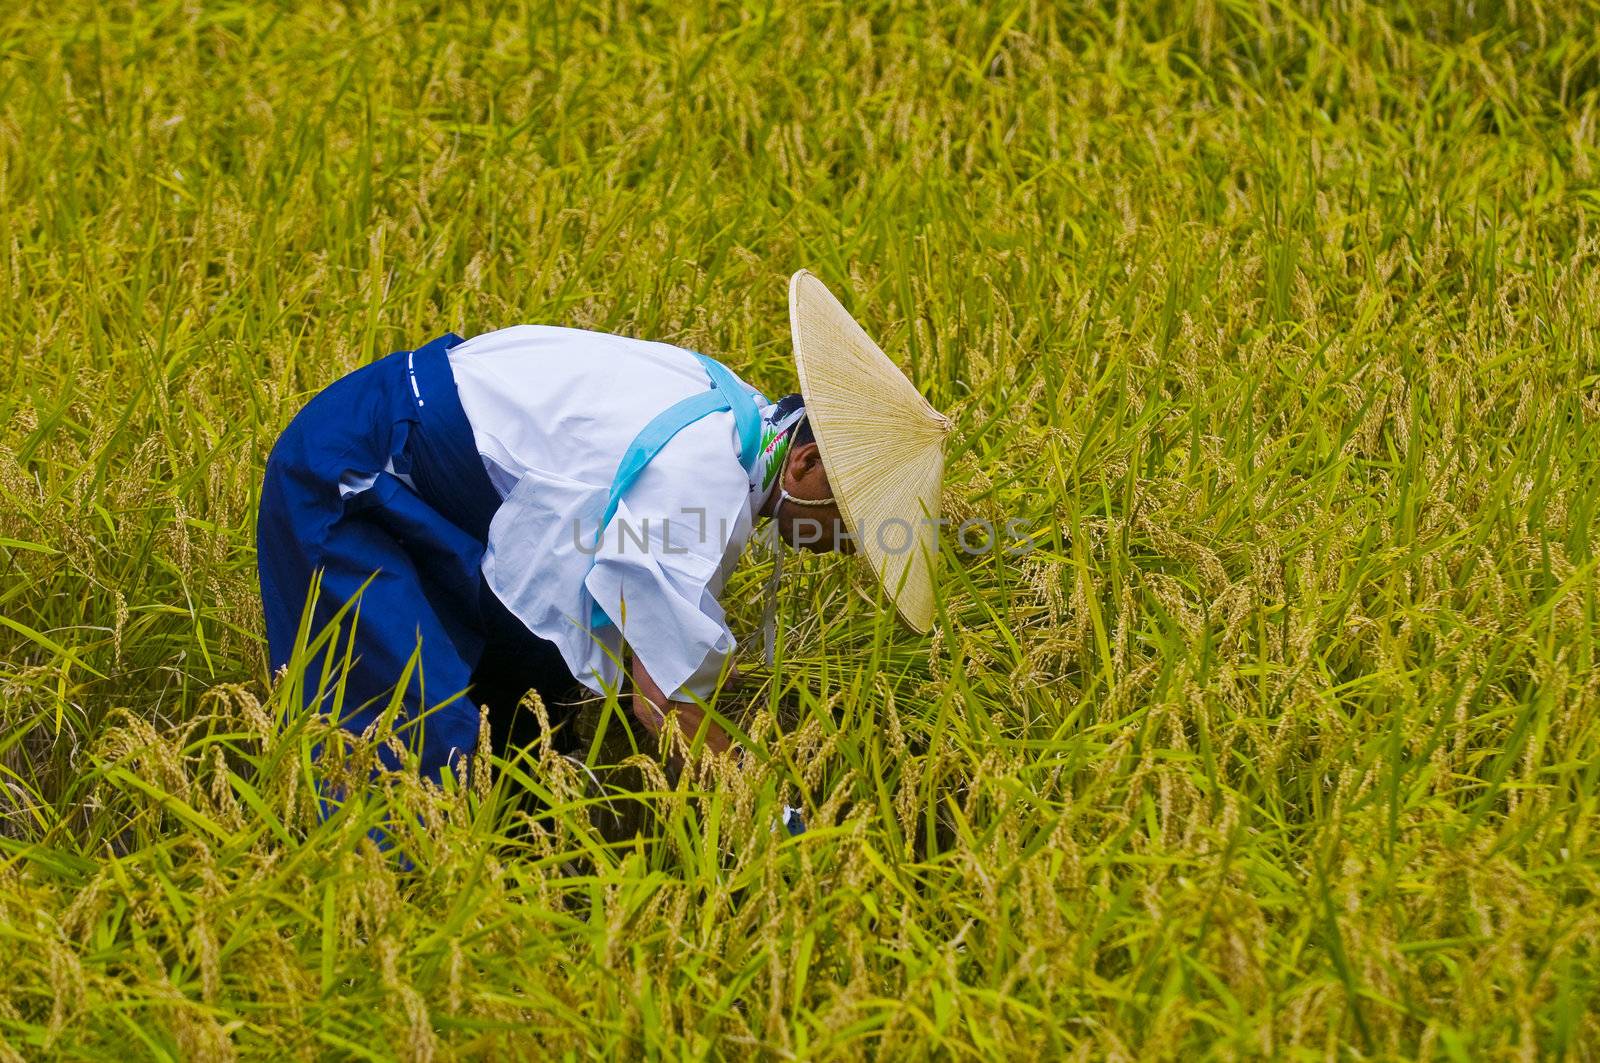 Rice harvest ceremony by kobby_dagan